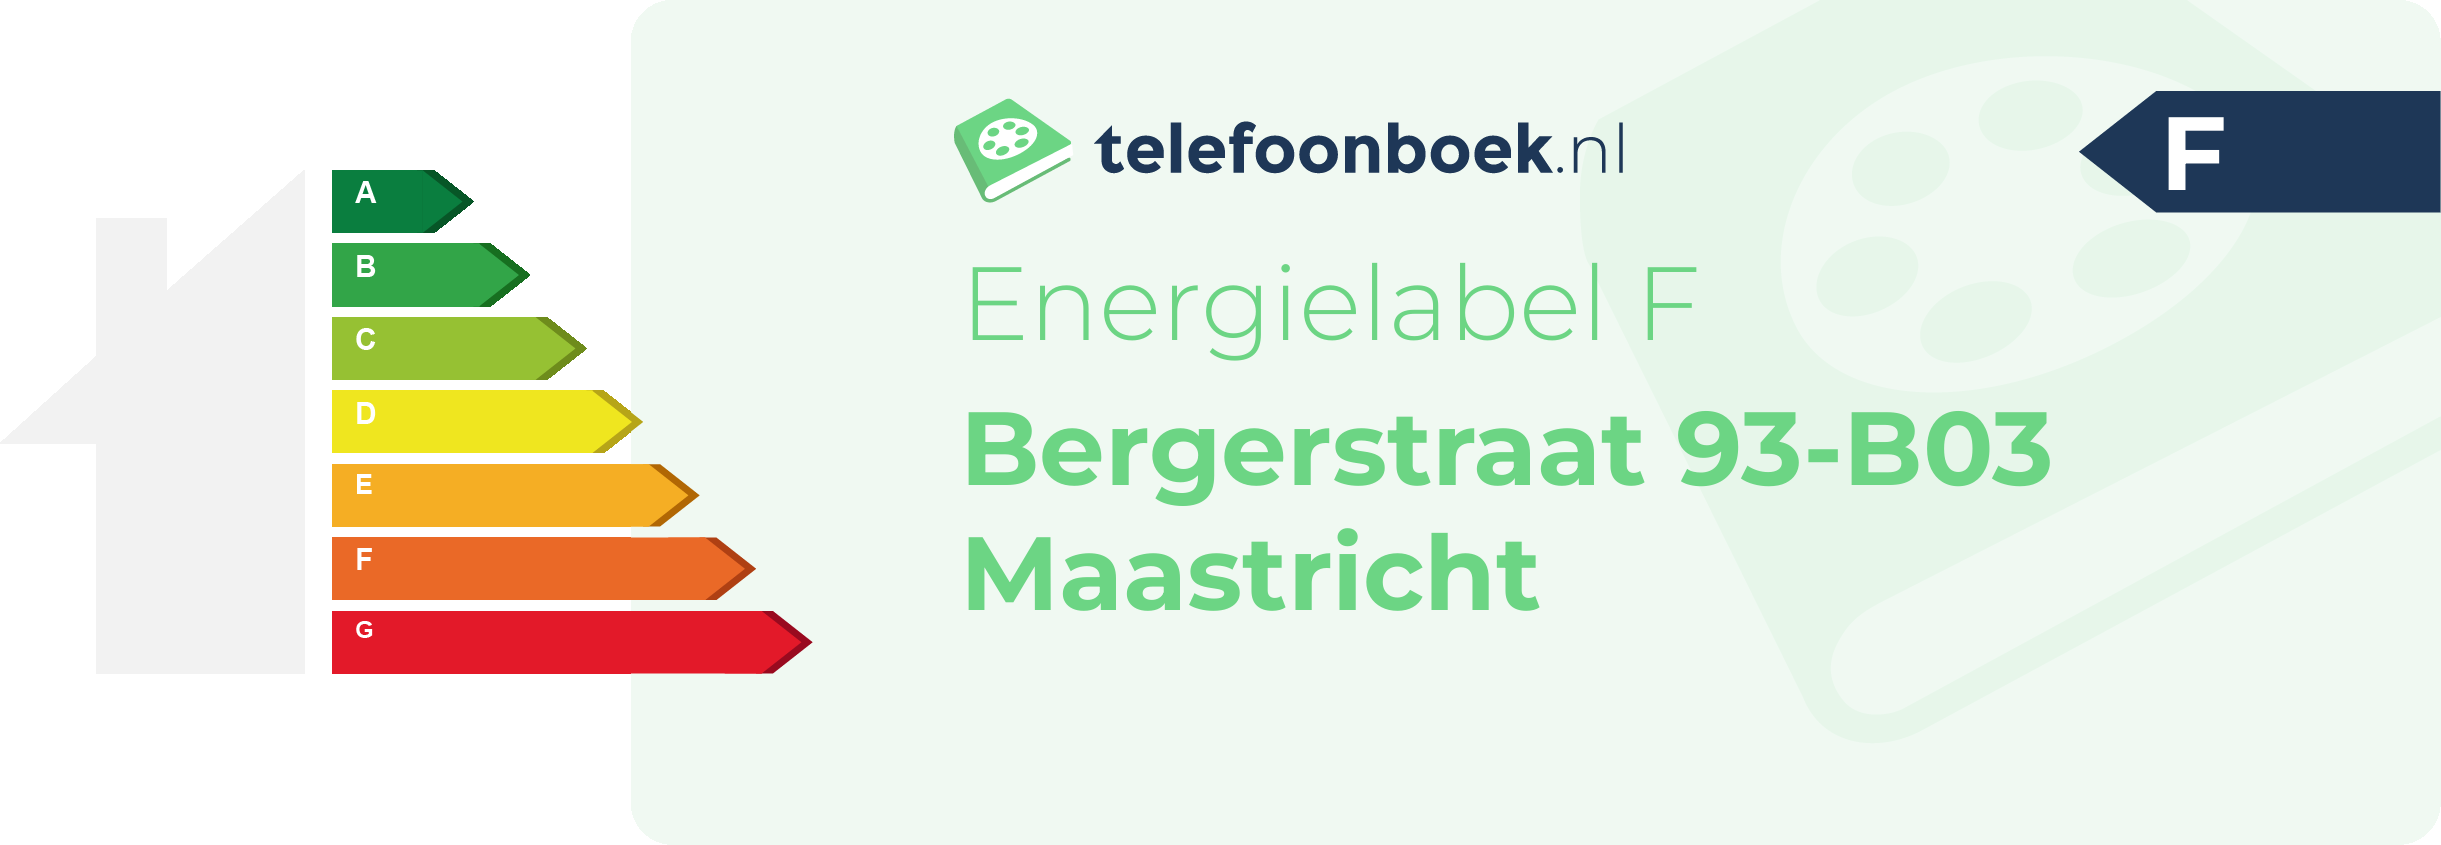 Energielabel Bergerstraat 93-B03 Maastricht